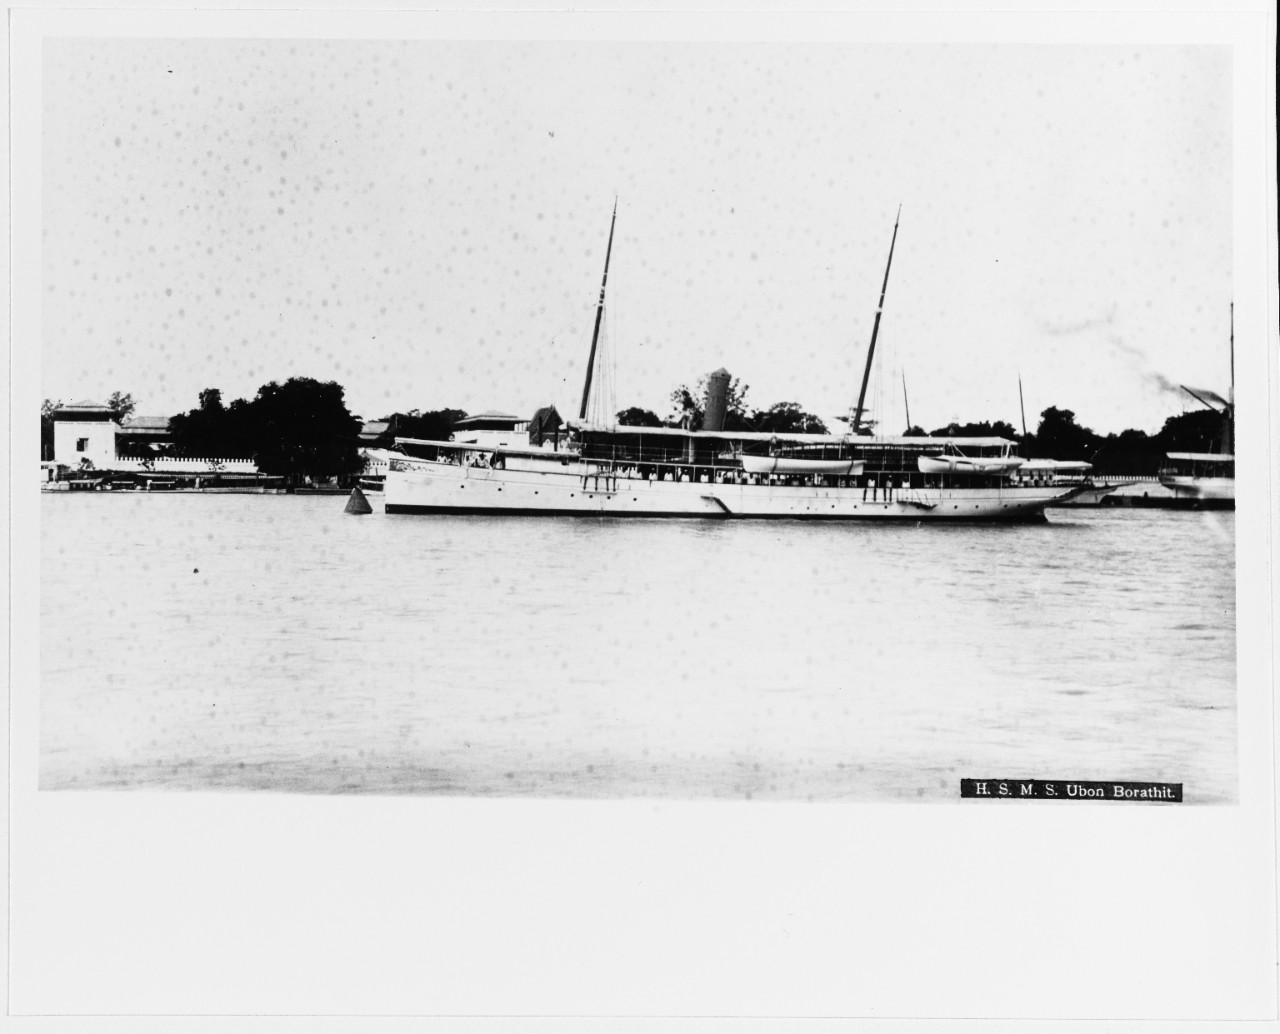 UBON BORATHIT Vessel, 1879.)